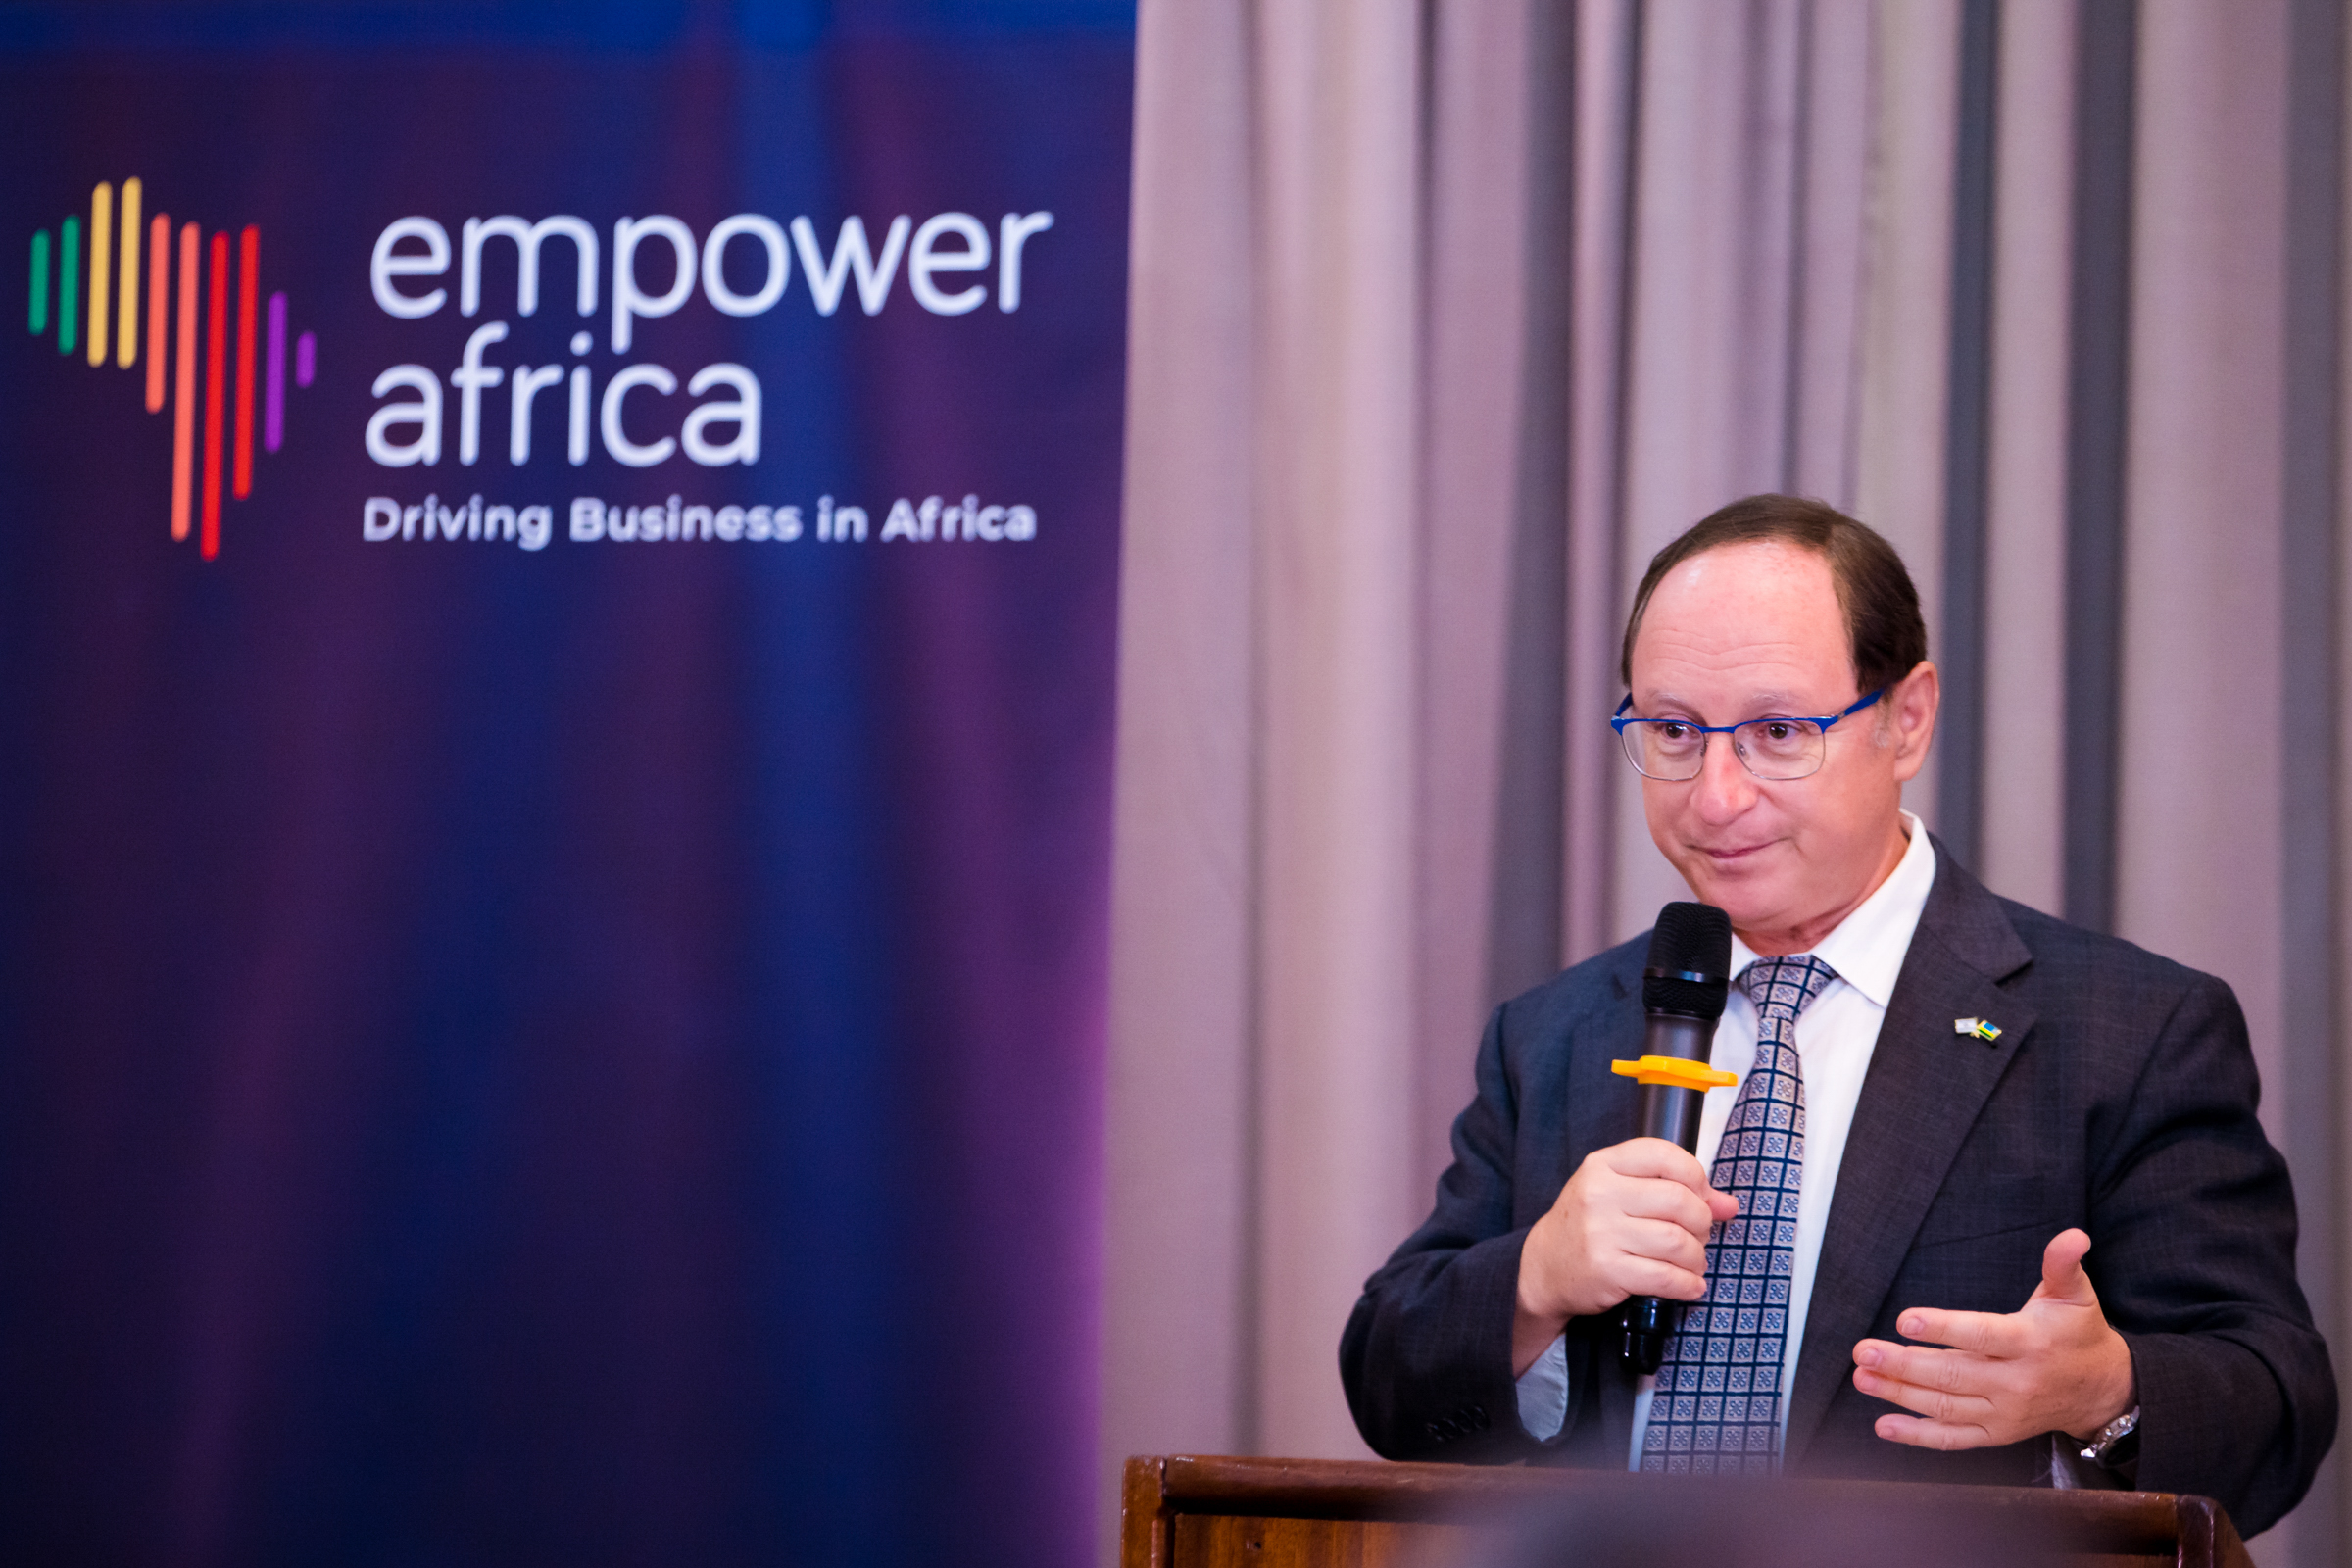 Ron Adam, Israeli Ambassador to Rwanda, speaks during the launch of Empower Africa business networking platform.